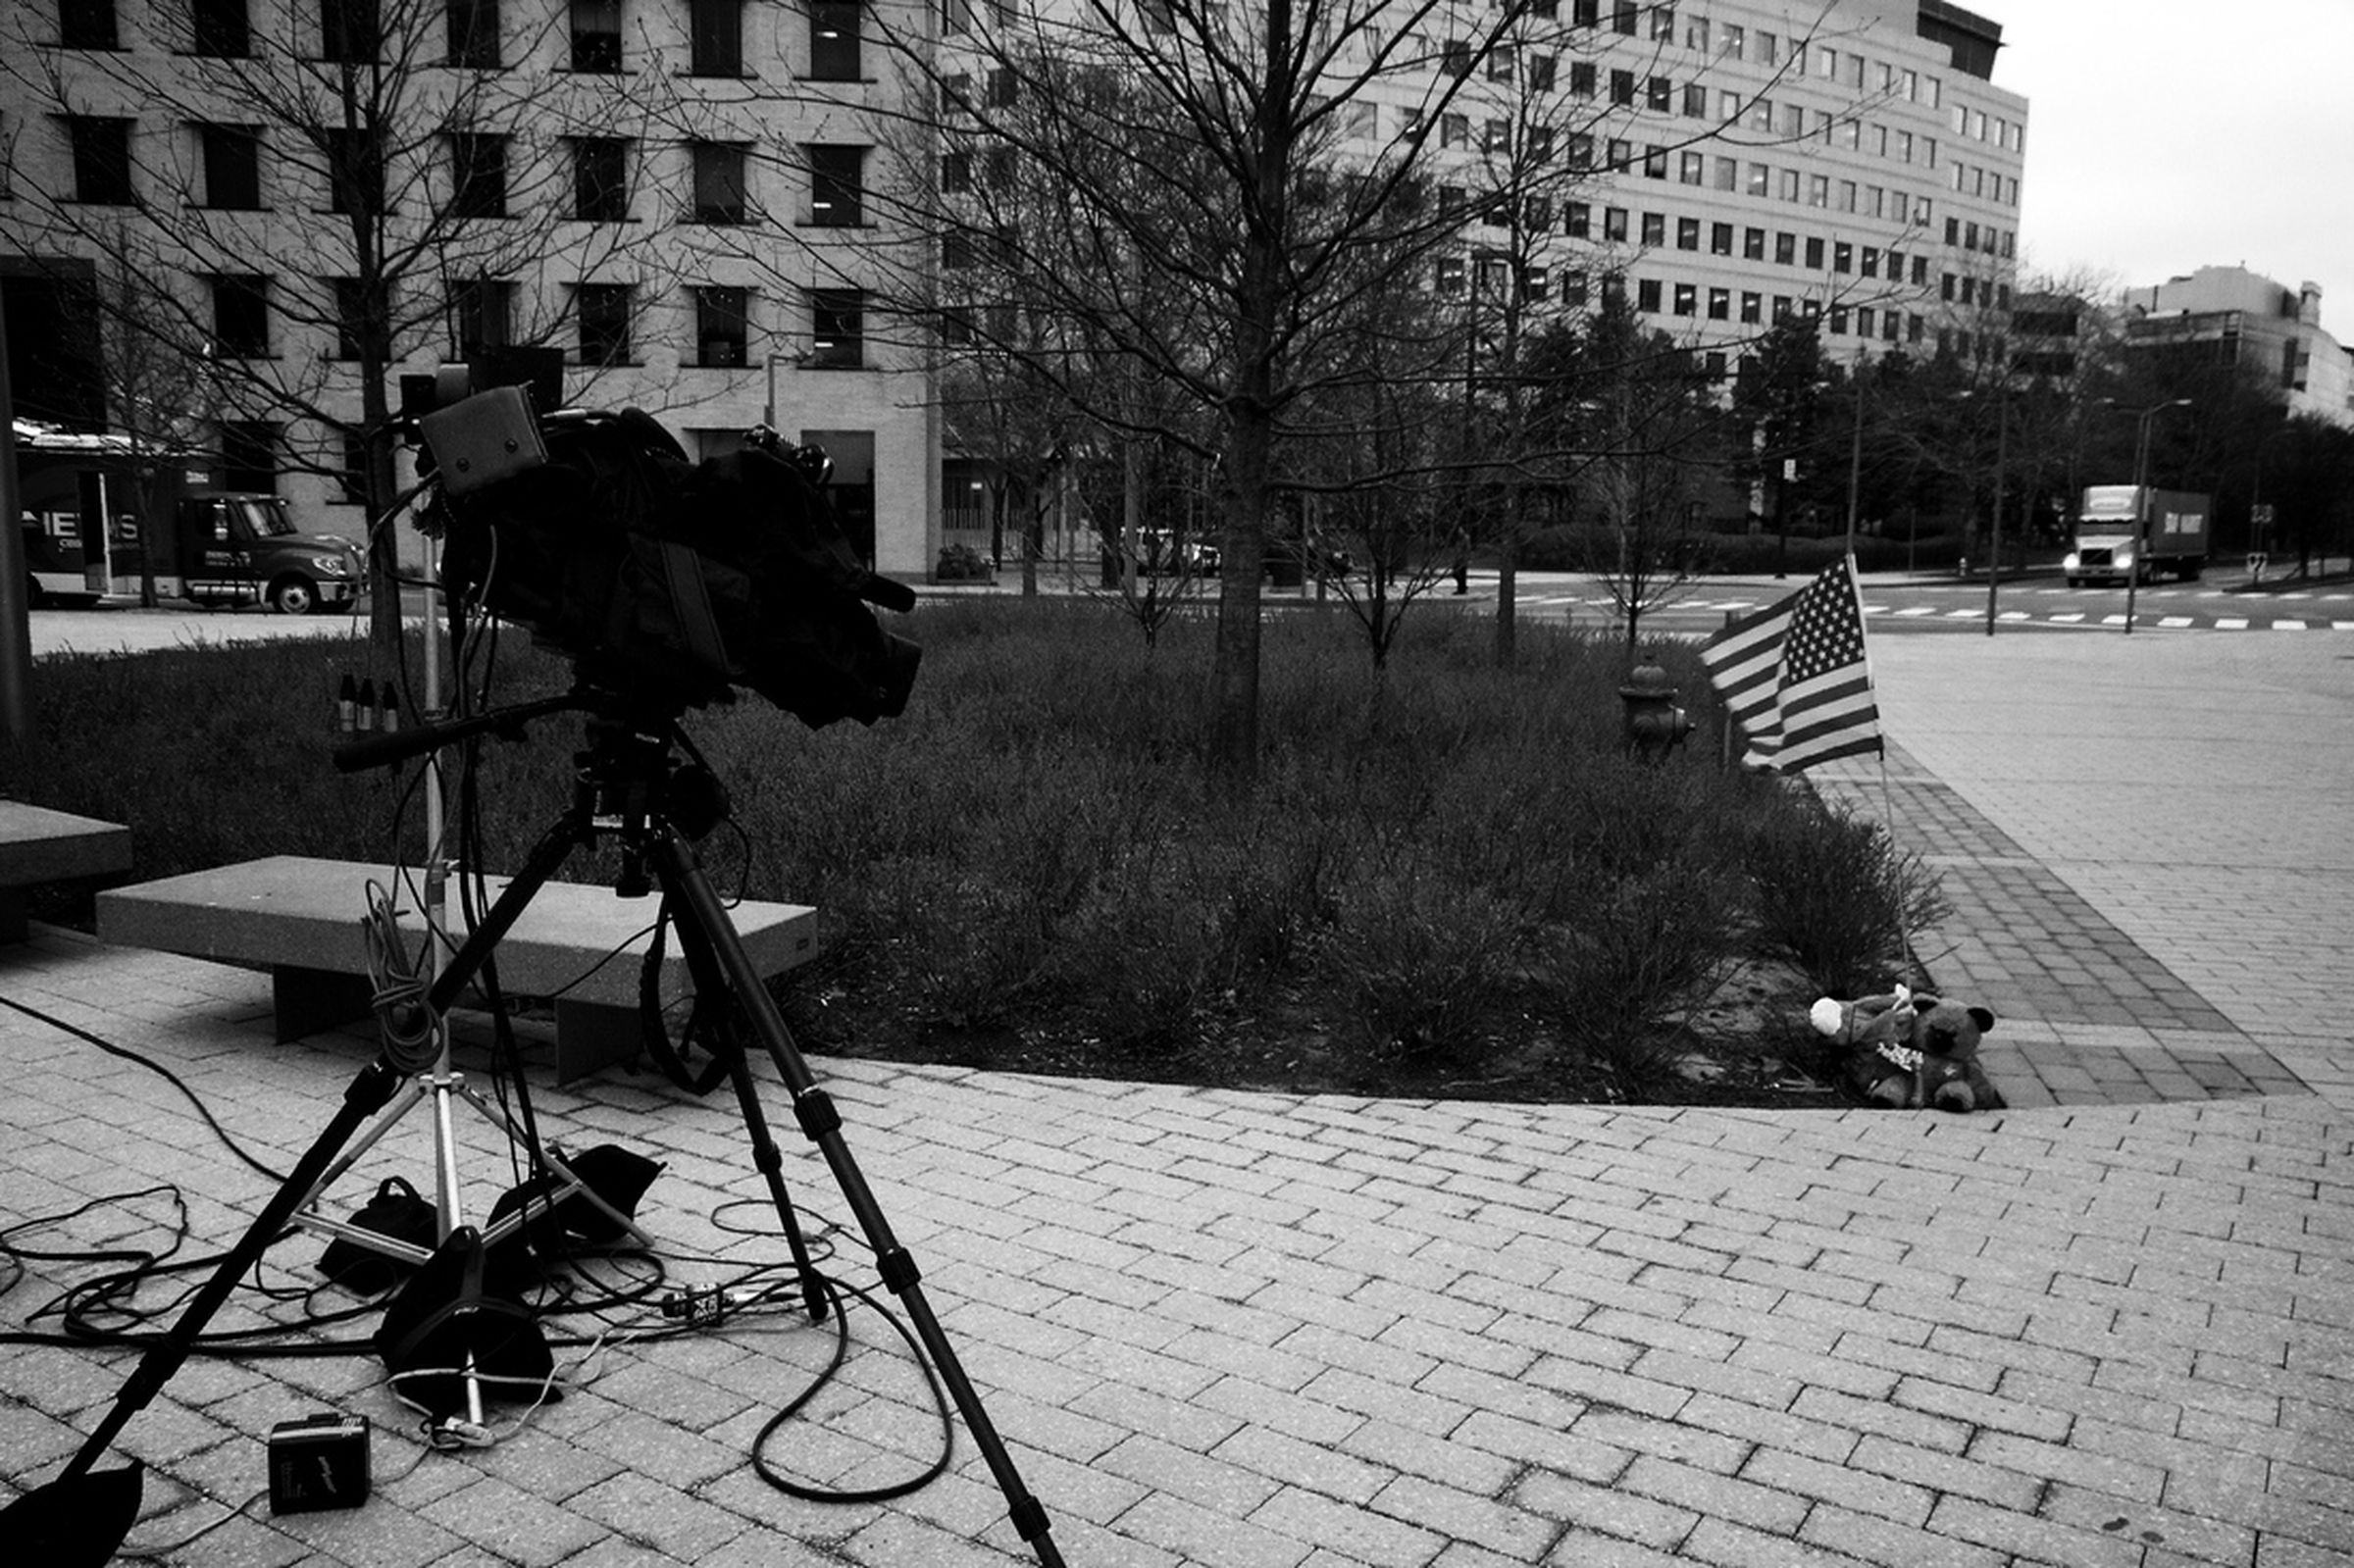 Boston under lockdown photographs